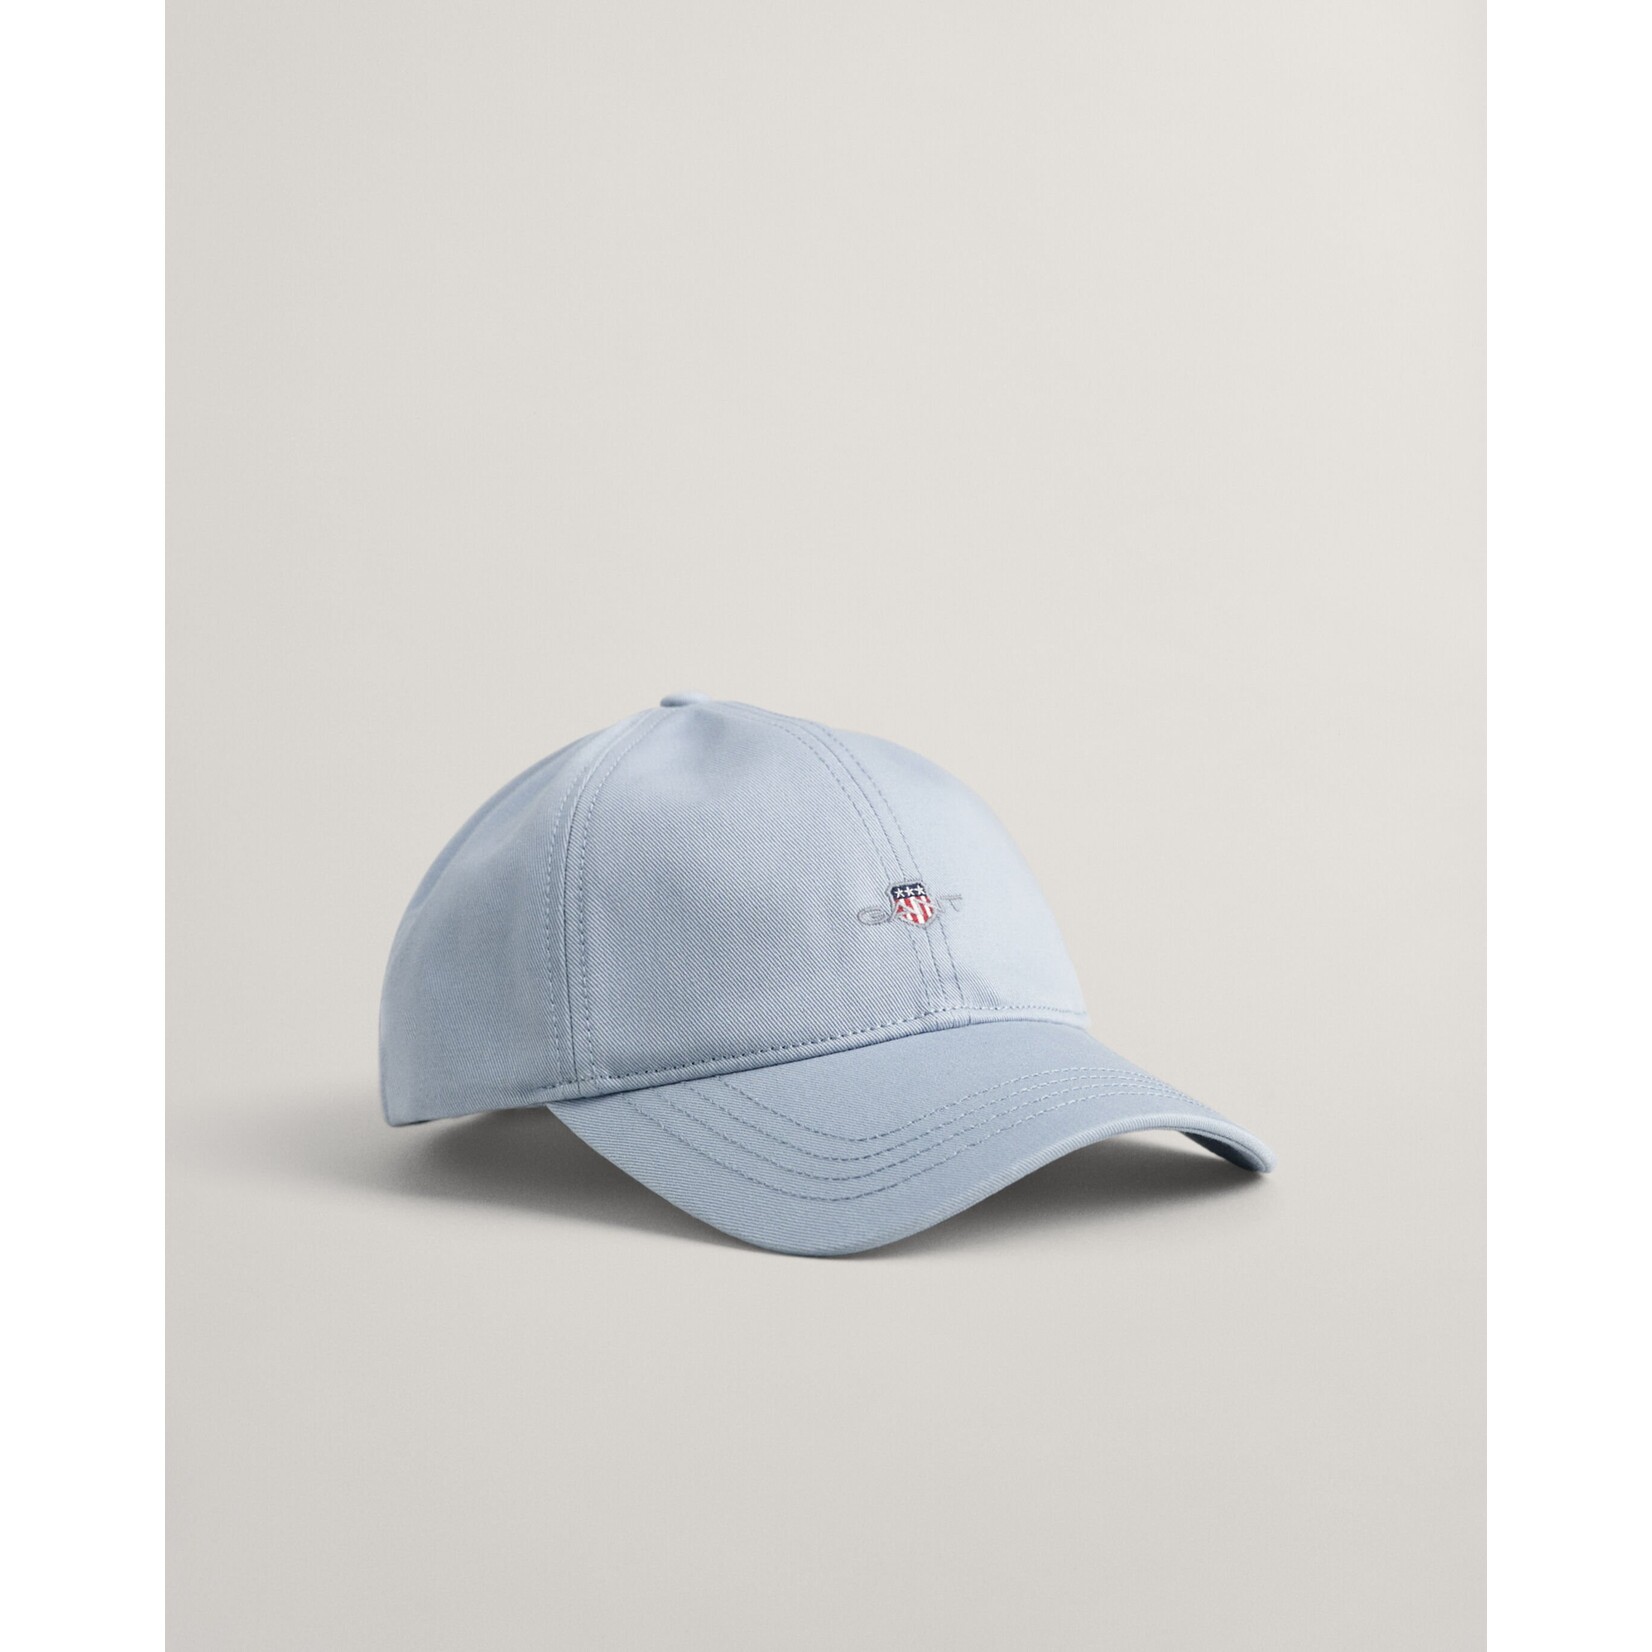 GANT shield cap bleu